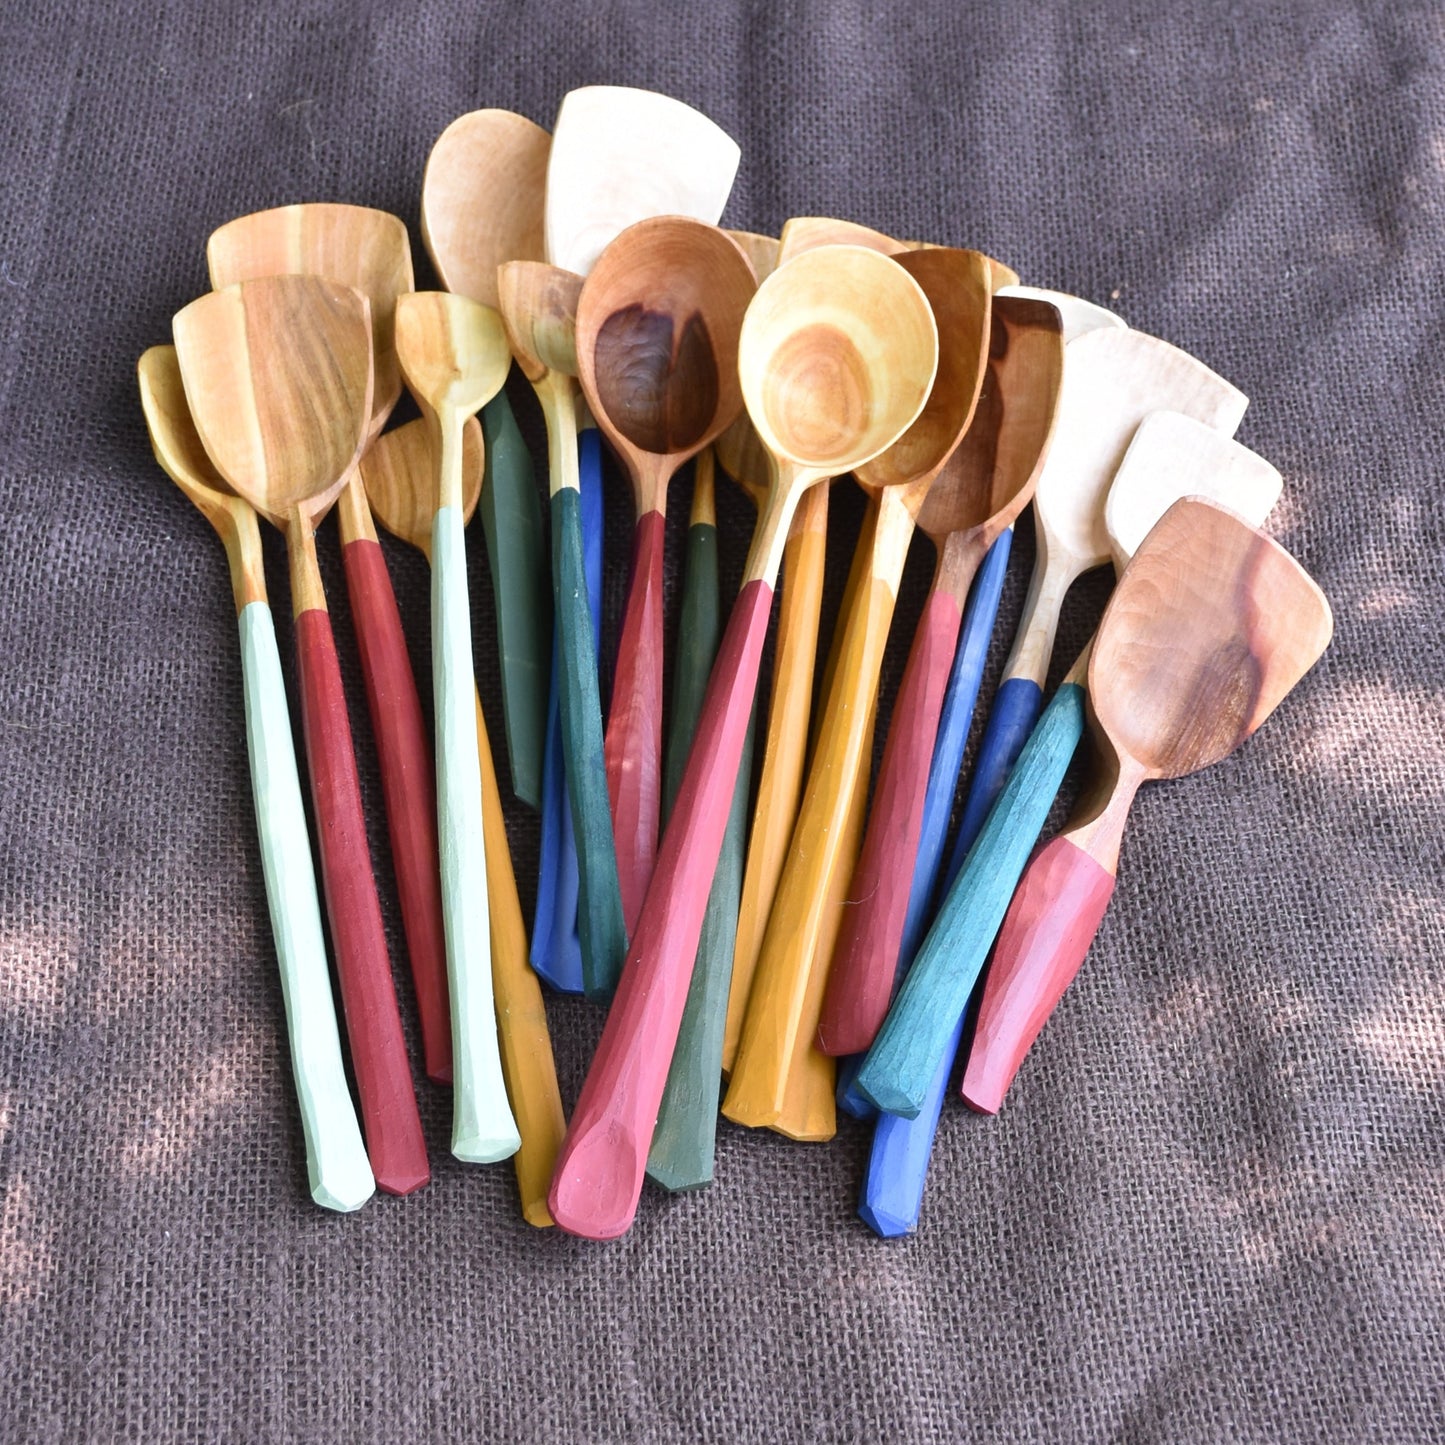 Spoon Carving Workshop Voucher